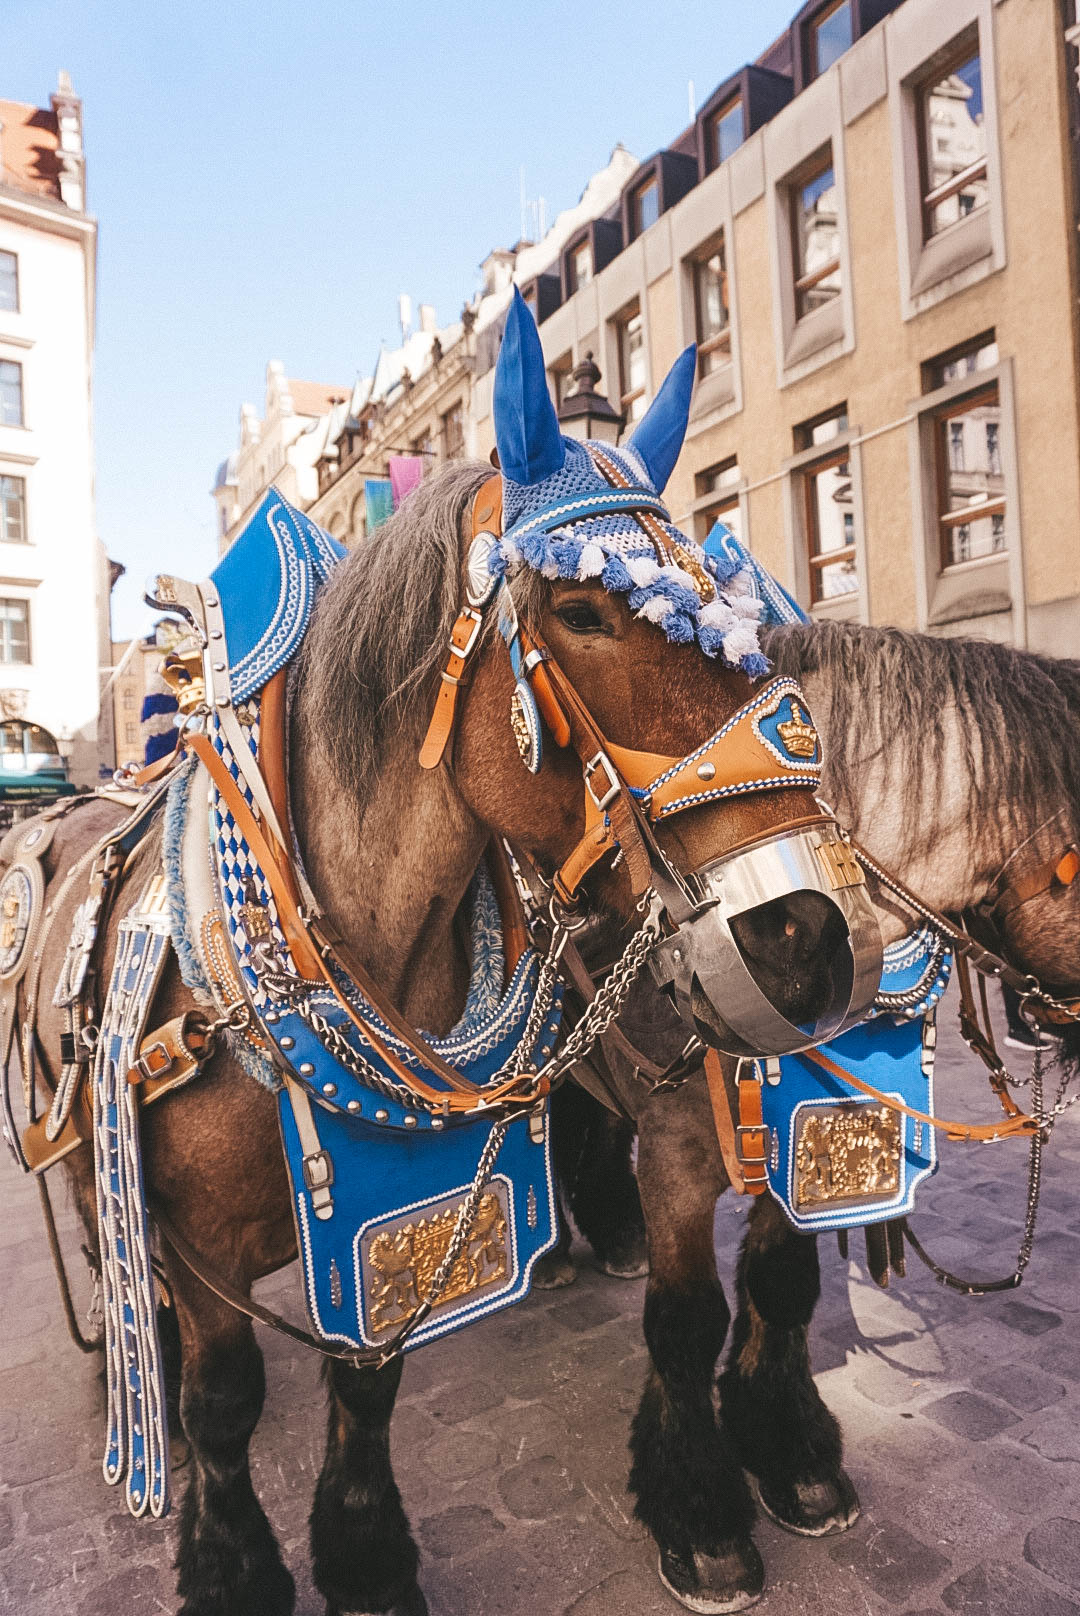 Horses in Munich, Germany, dressed for Oktoberfest 